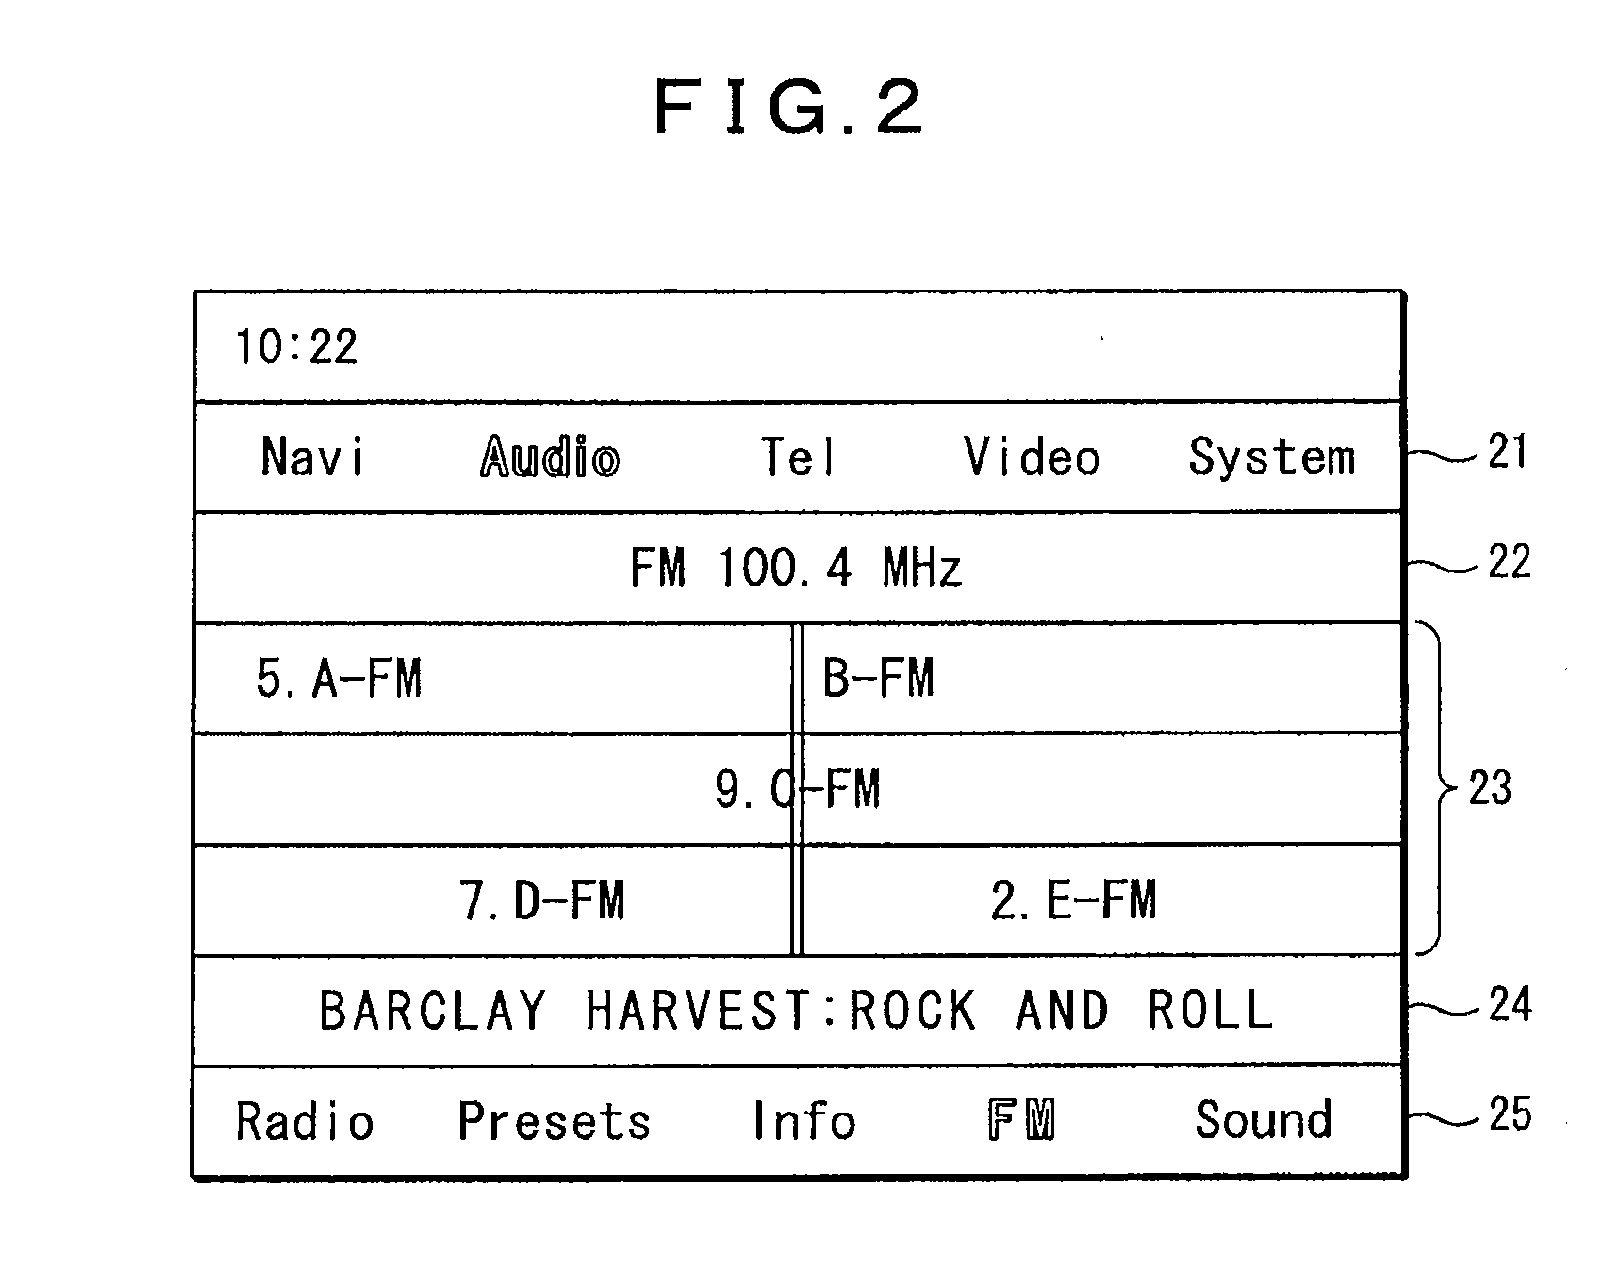 Broadcast receiving apparatus and radio receiving apparatus